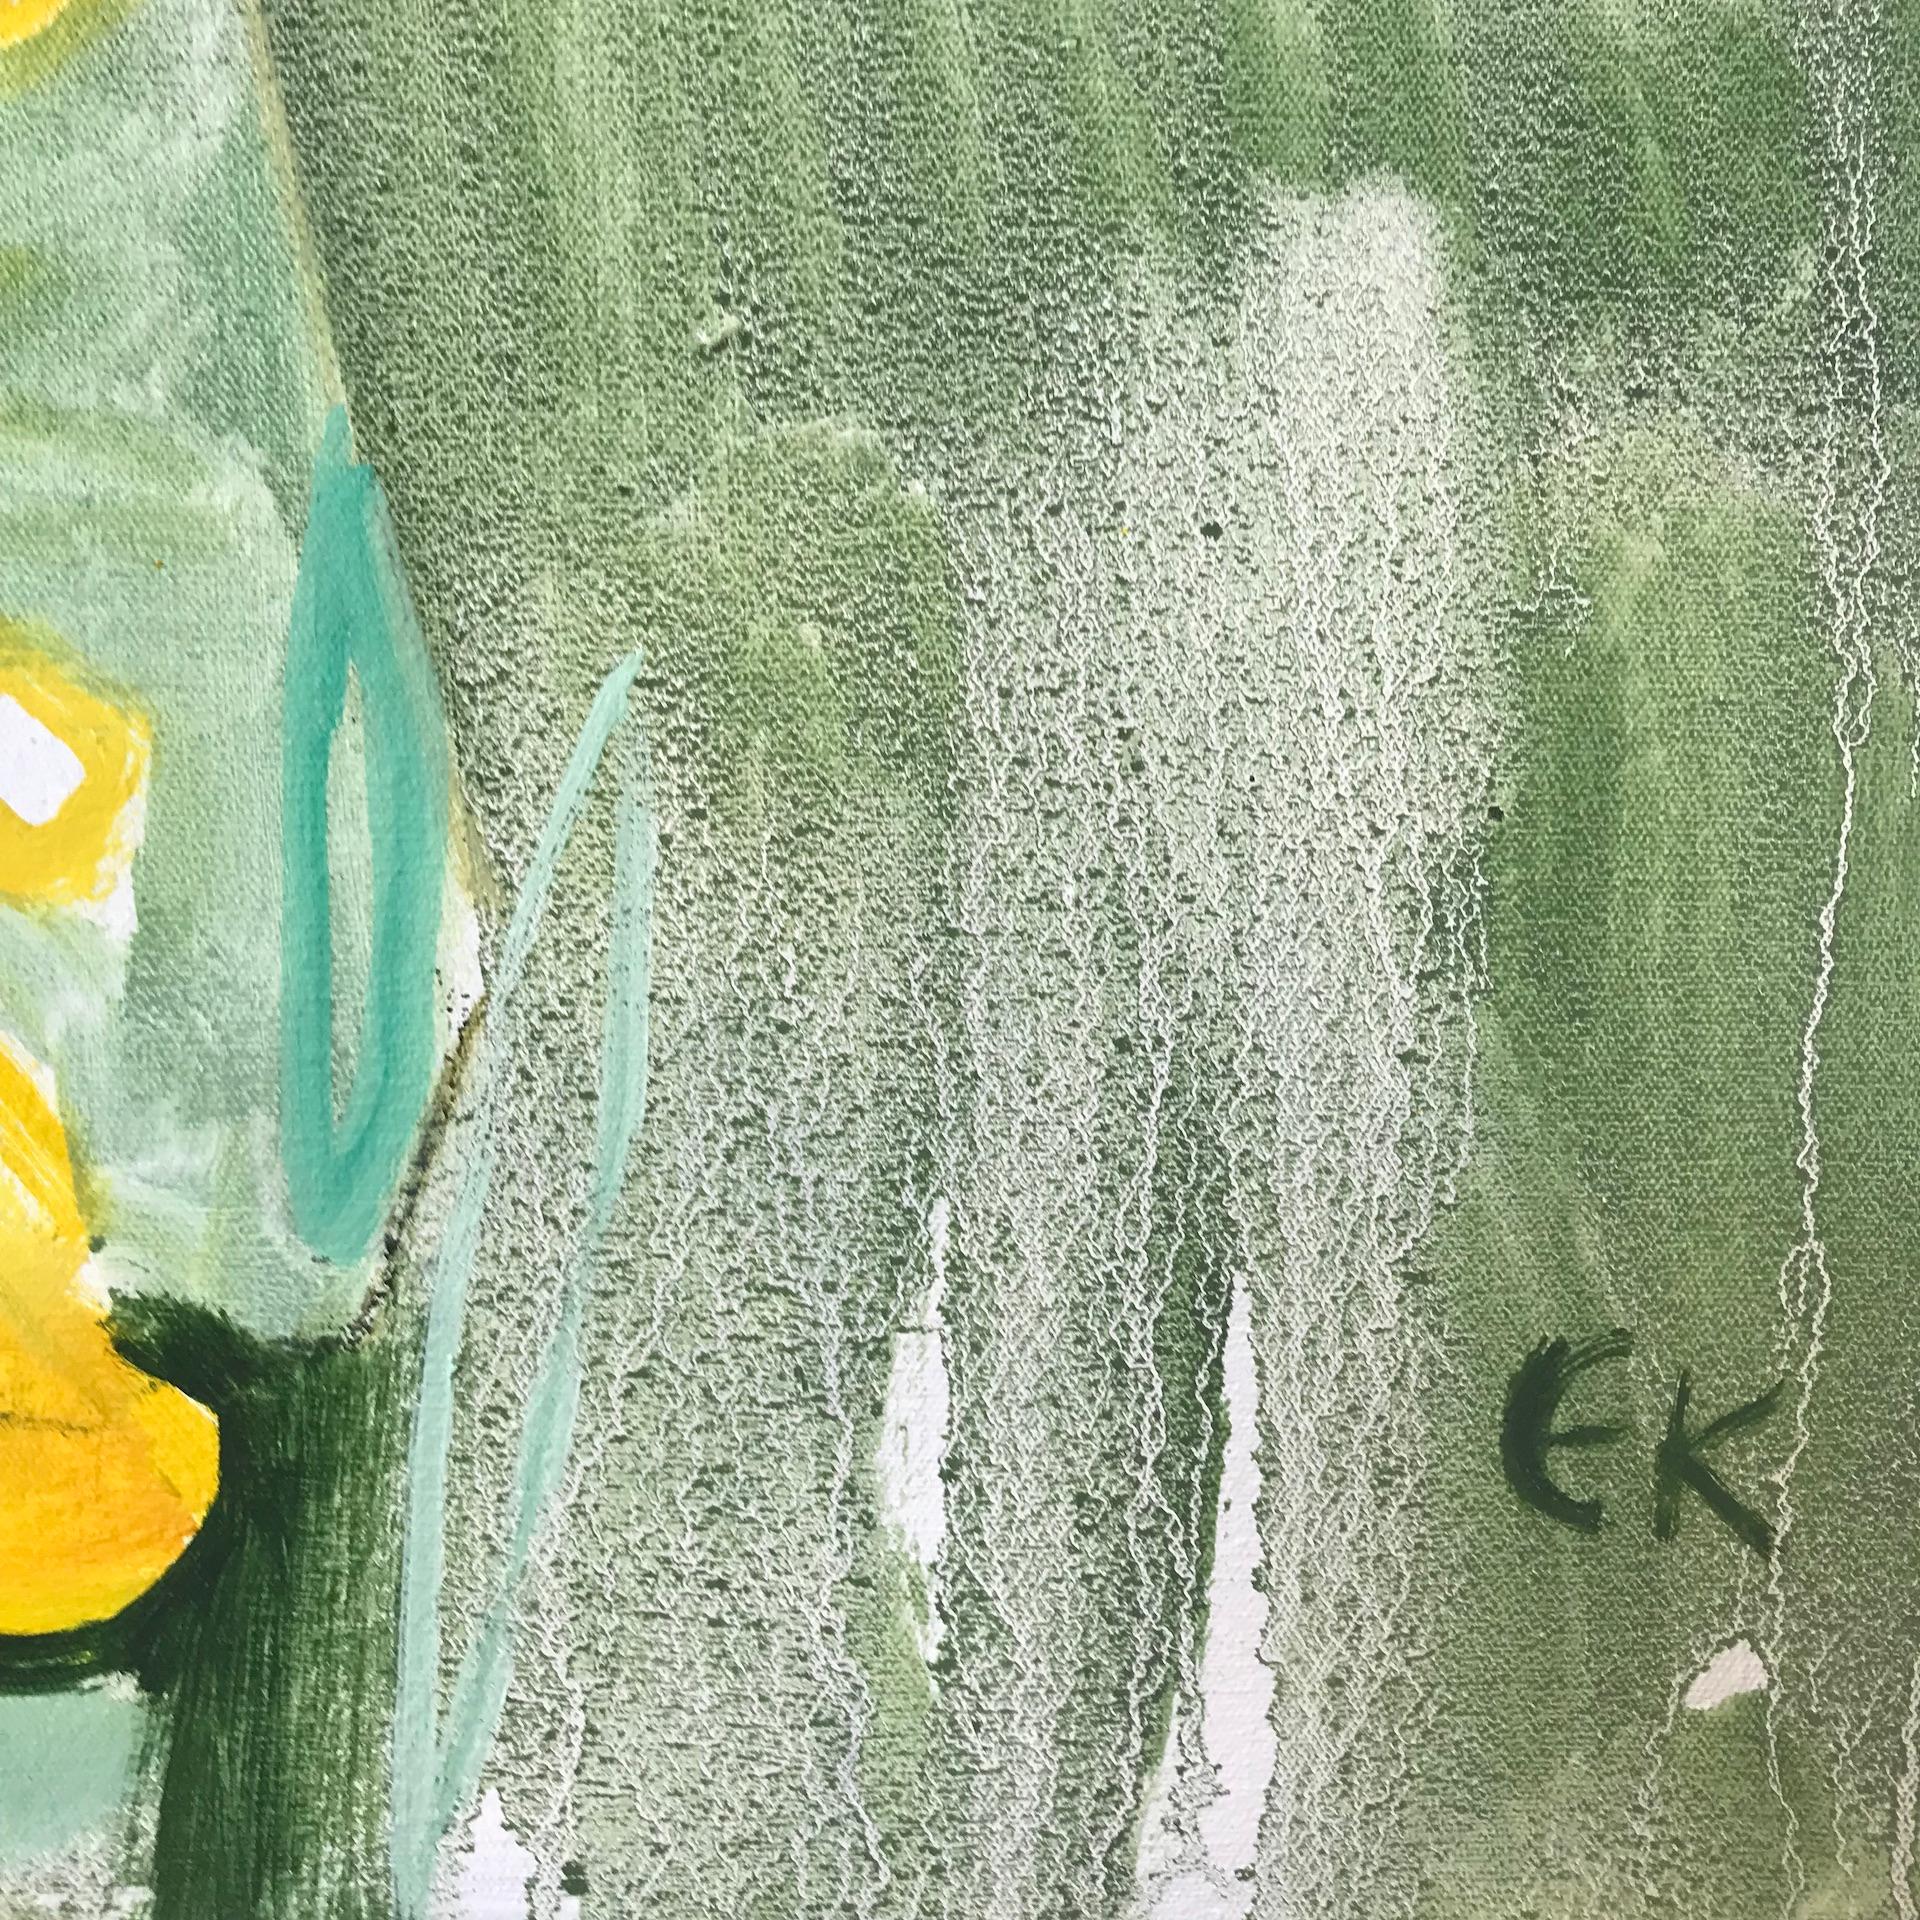 Just Buttercups by Elaine , Original art, Contemporary abstract art, Painting - Green Landscape Painting by Elaine Kazimierczuk